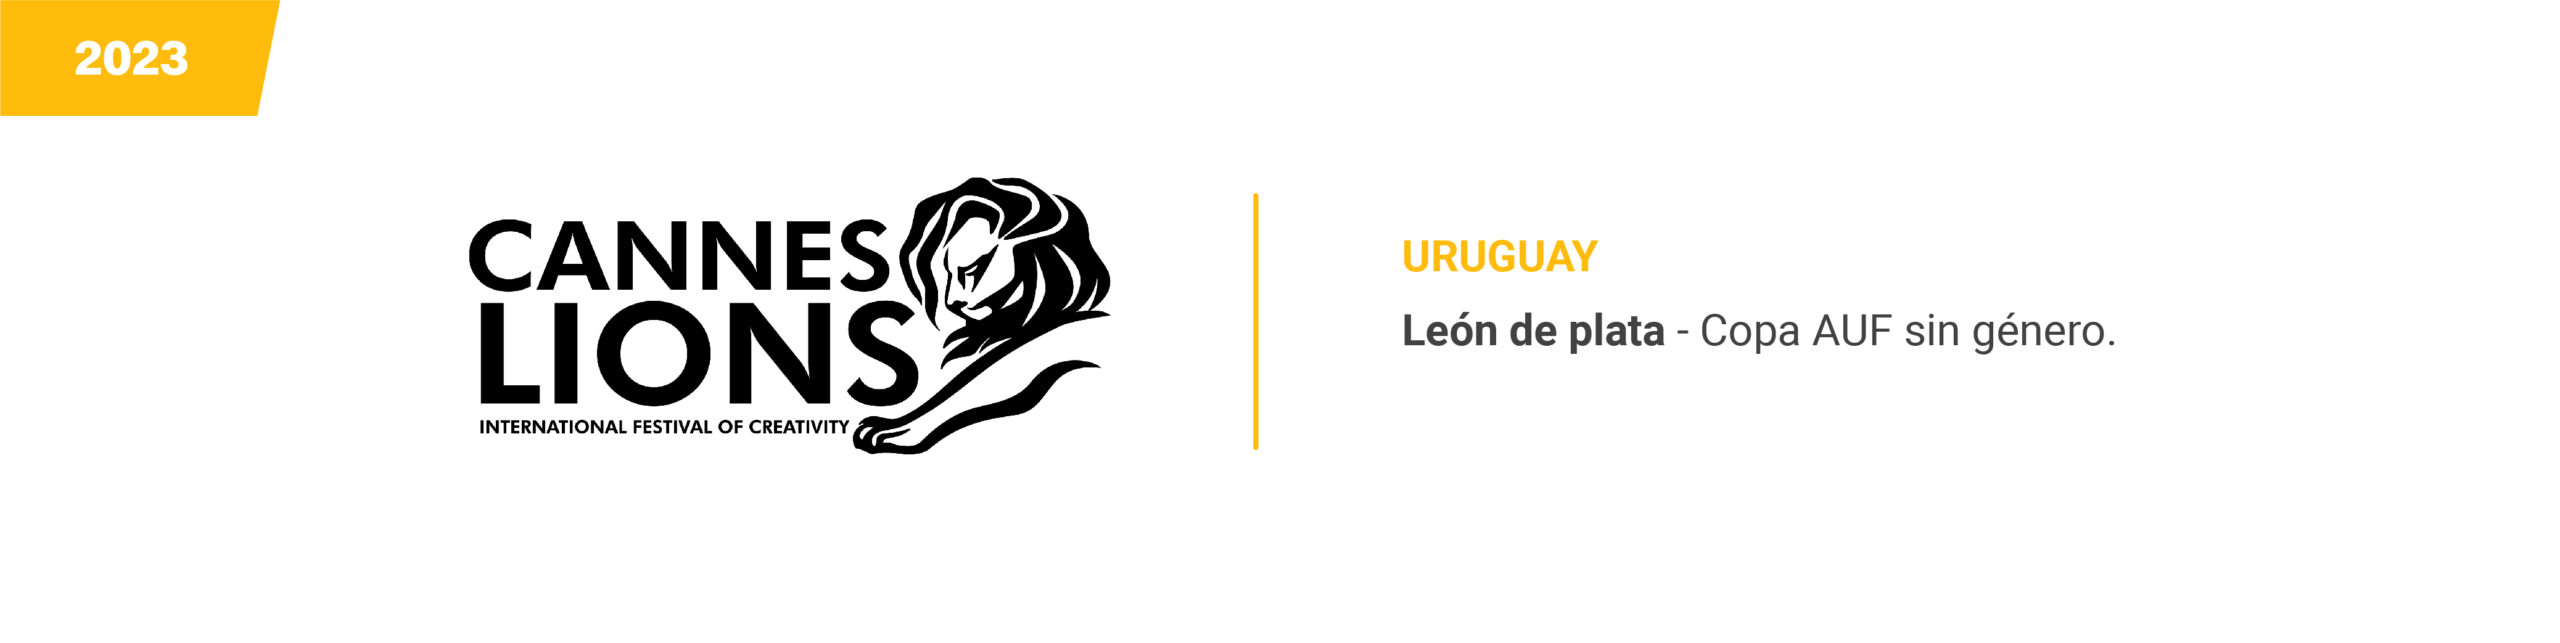 CANNES LIONS - Uruguay